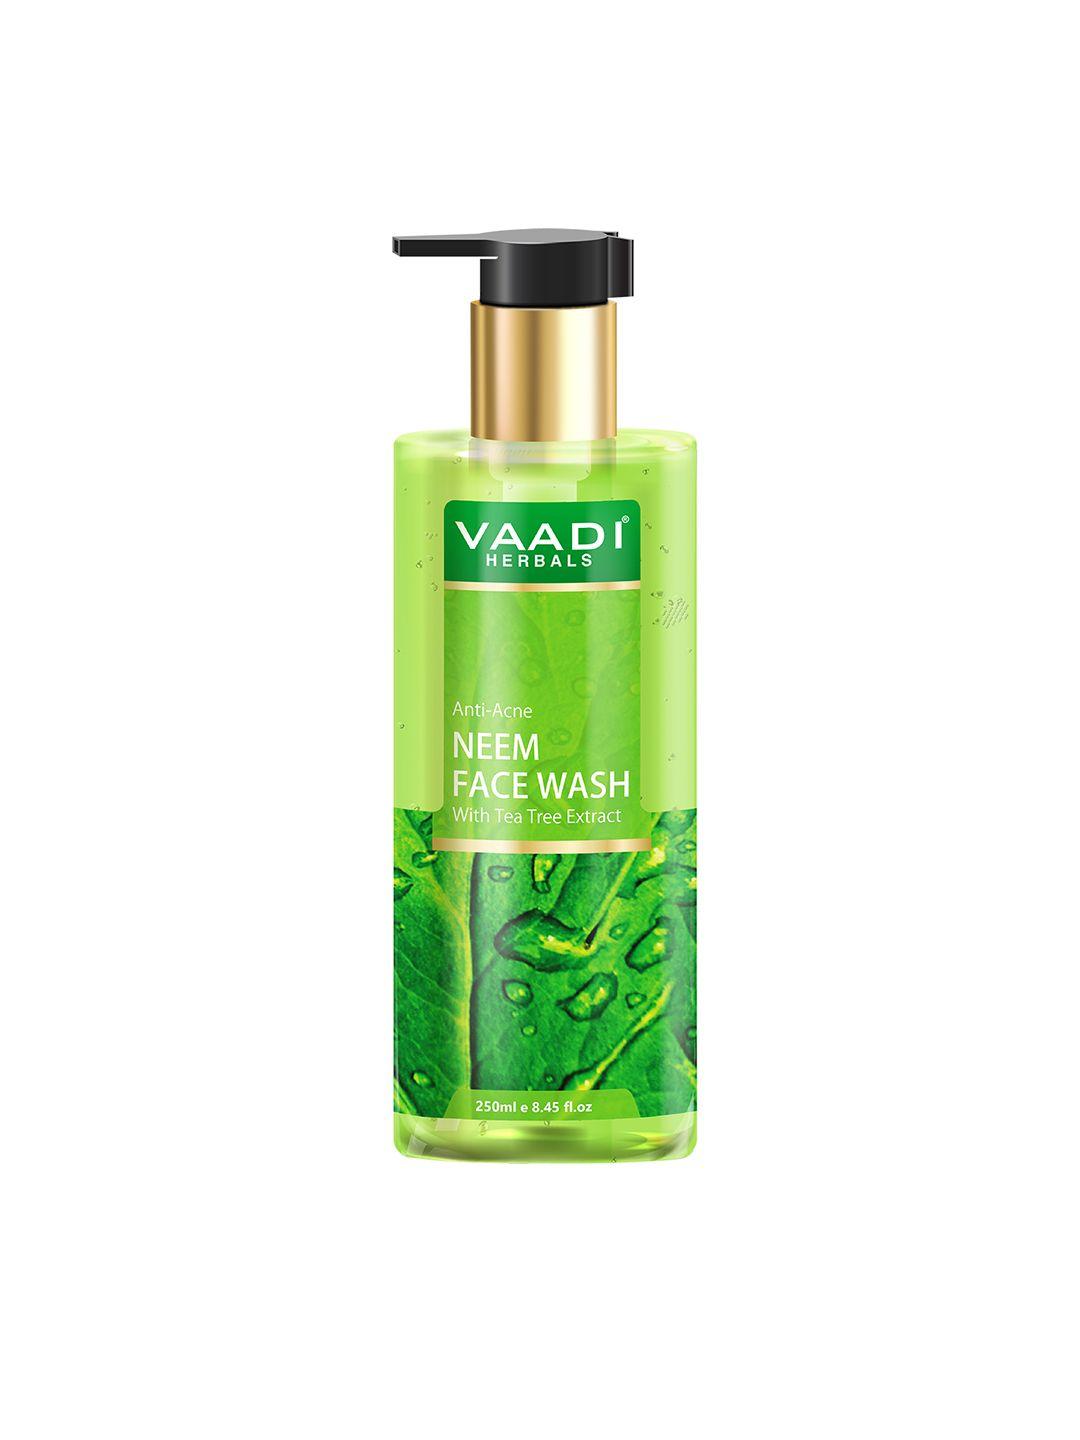 vaadi herbals anti-acne neem face wash with tea tree extract - 250 ml